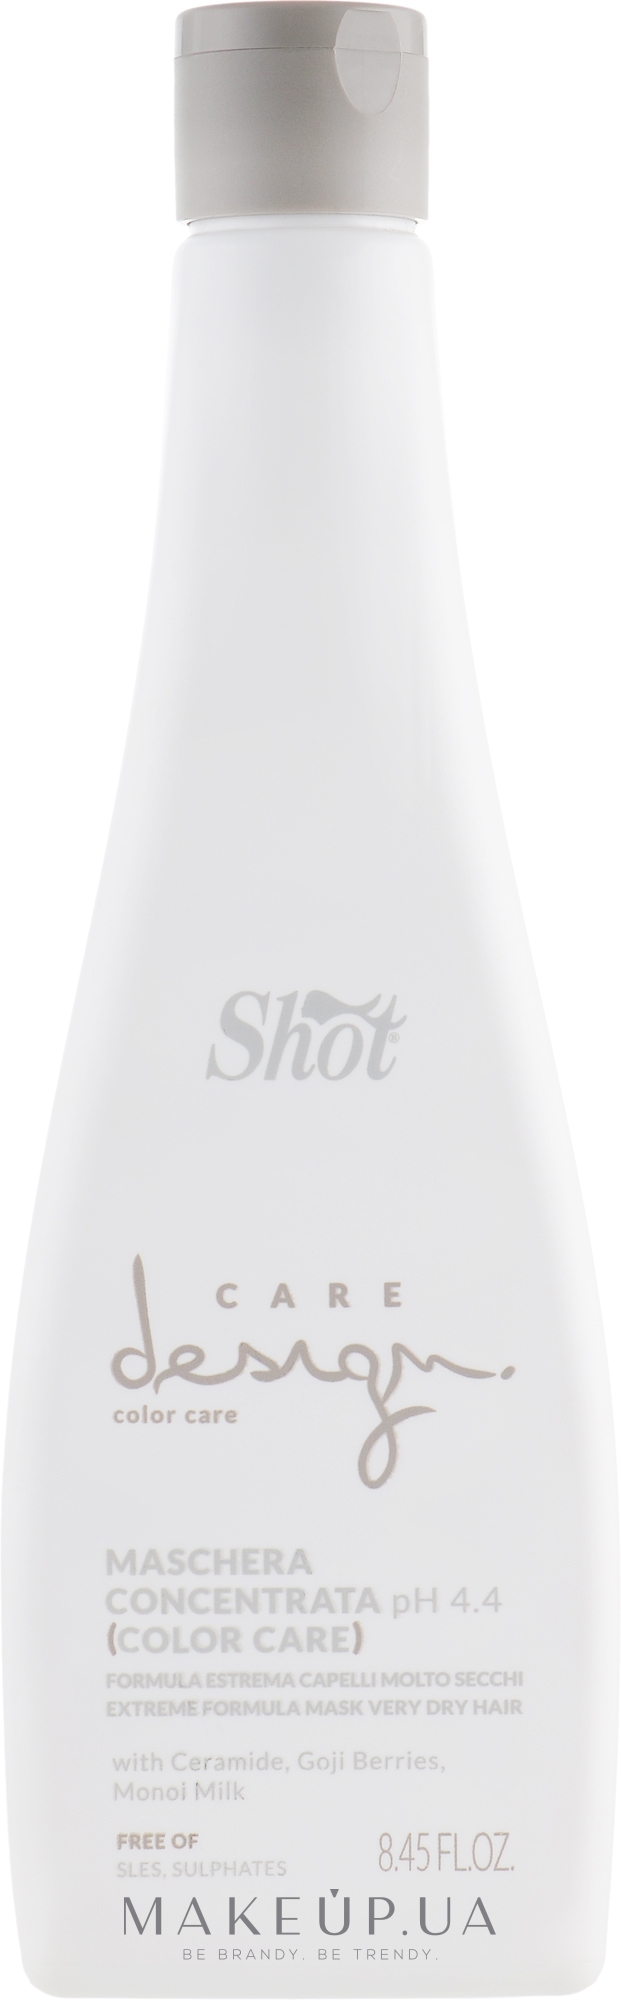 Маска-концентрат для окрашенных волос - Shot Care Design Color Care Extreme Formula Mask Very Dry Hair — фото 250ml